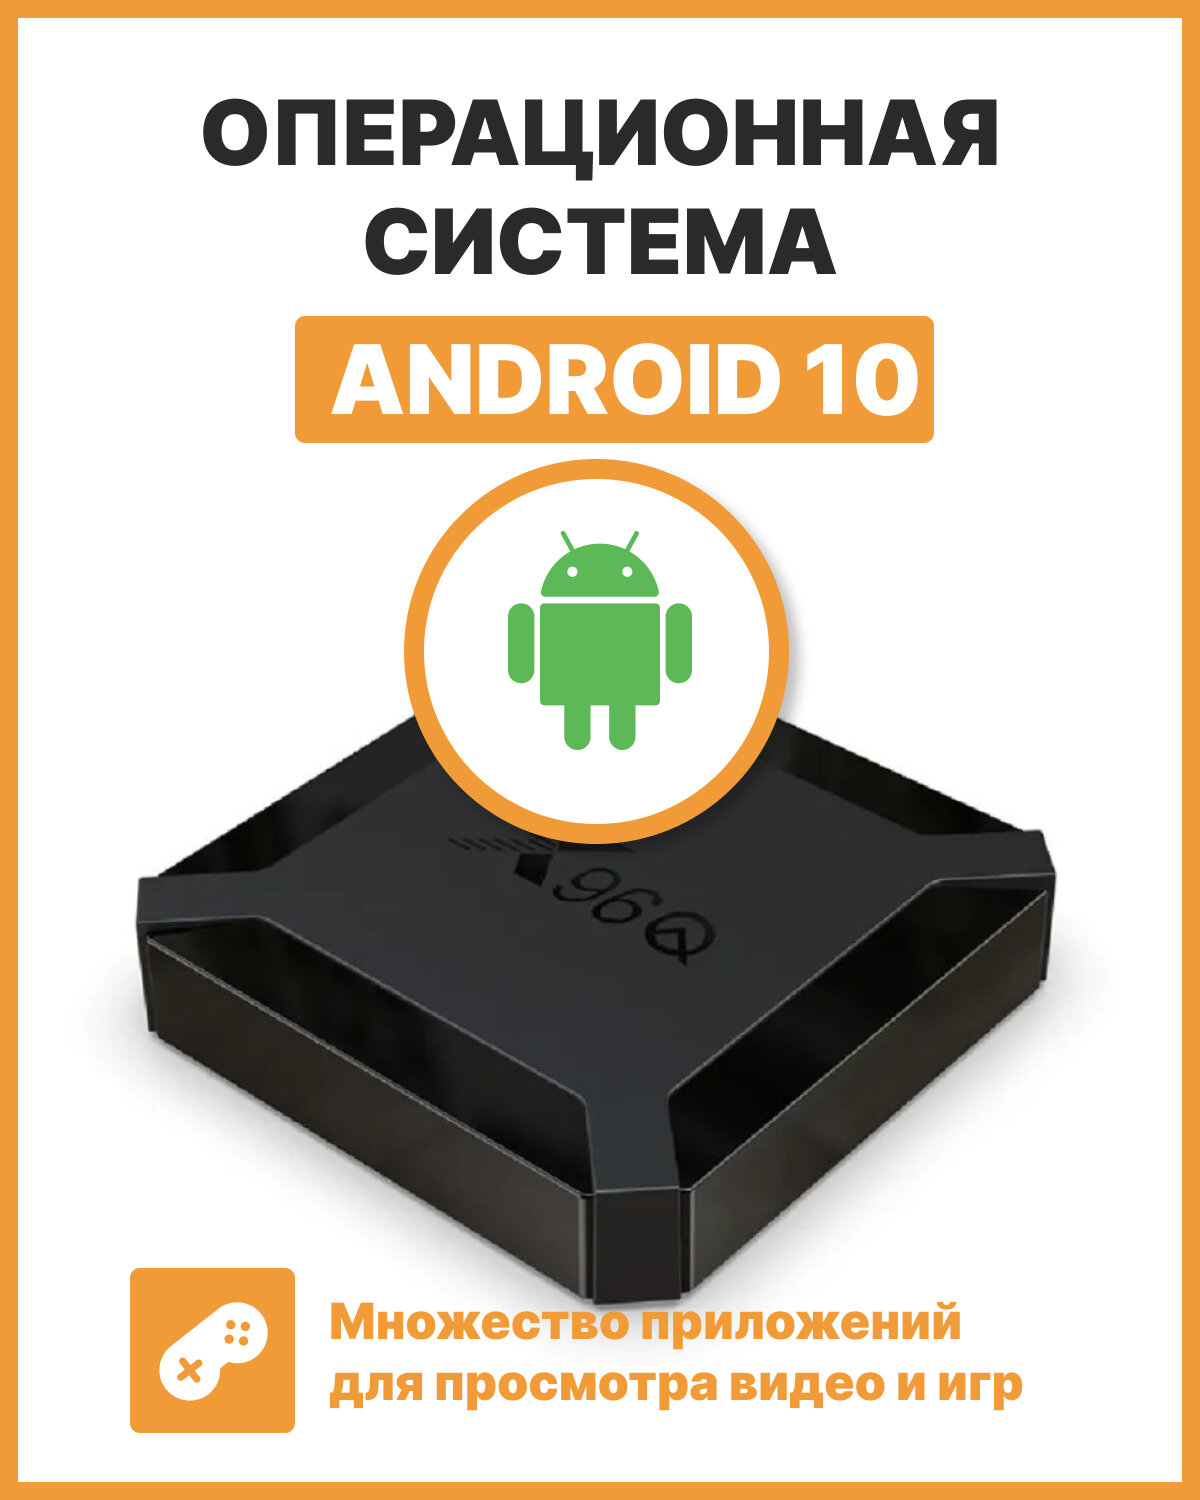 Смарт TV Box OneTech X96Q 4K Android 100 2/16 Гб